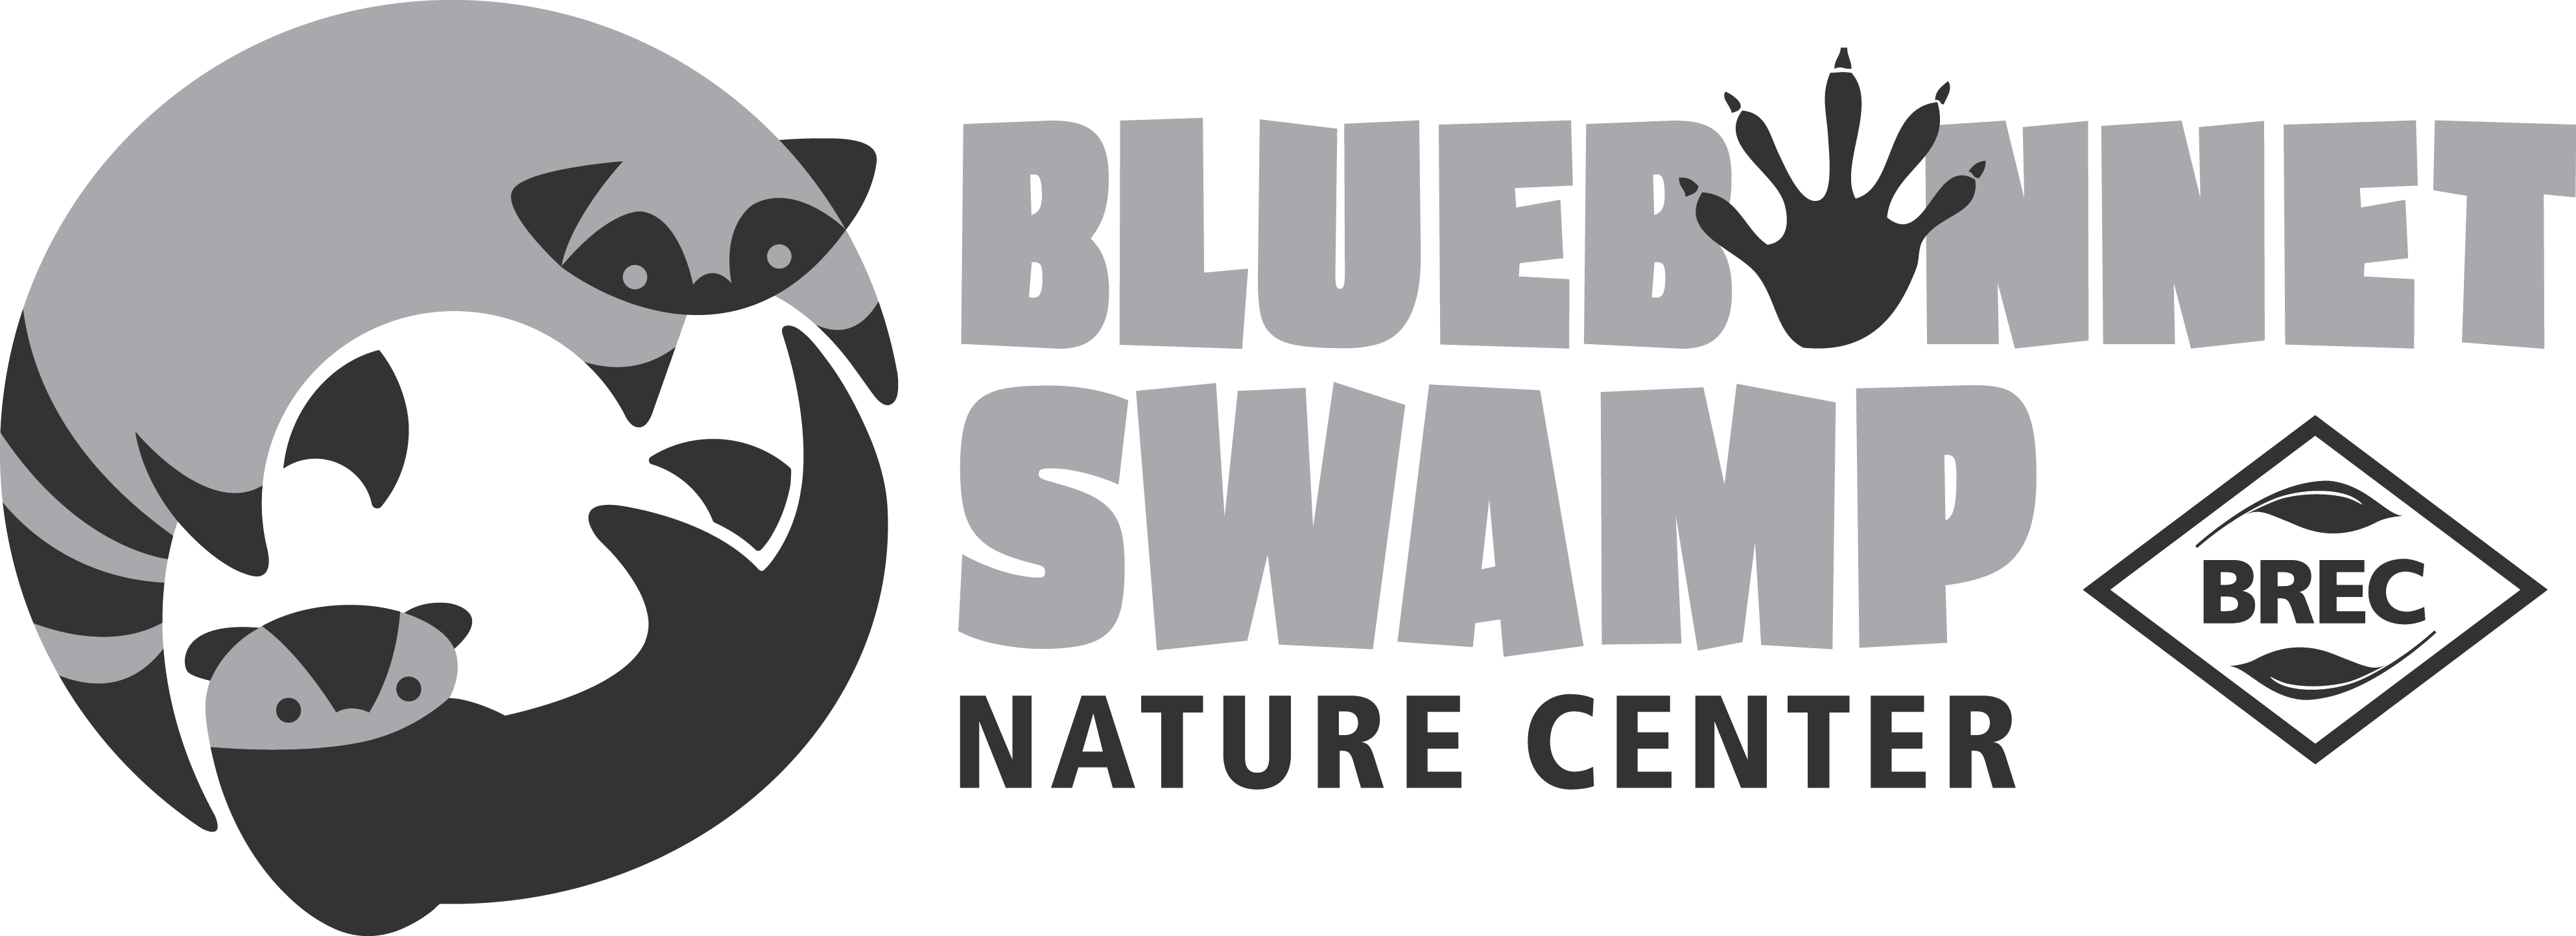 Bluebonnet Swamp Nature Center logo